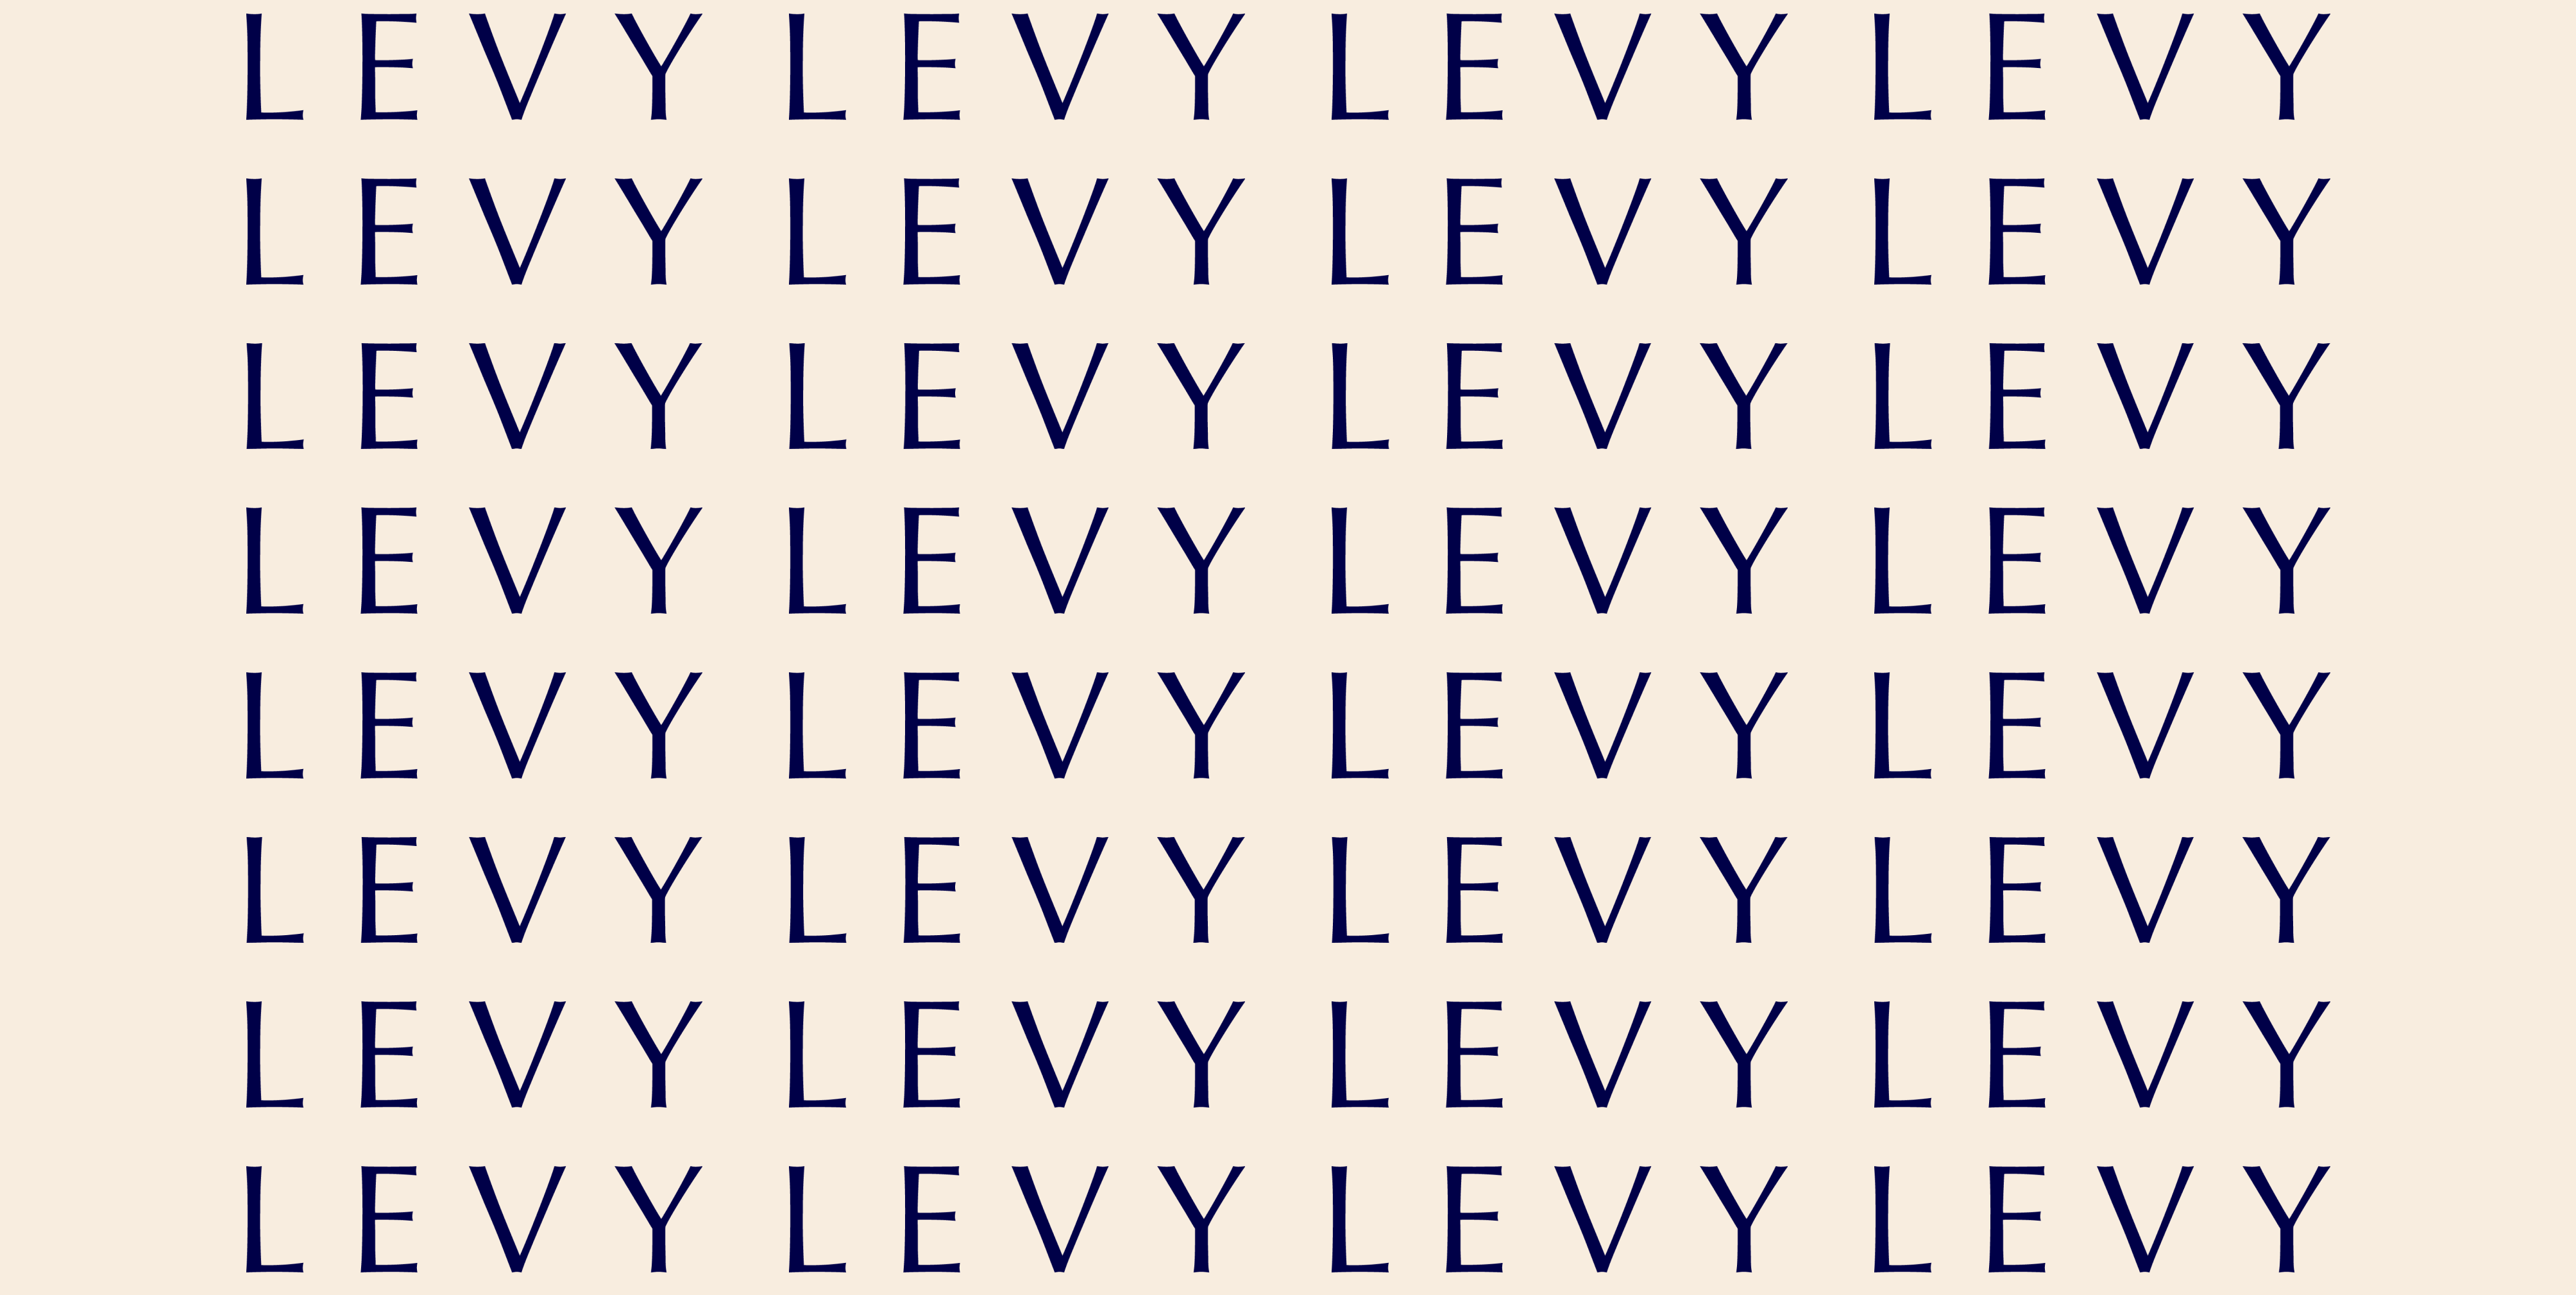 LEVY Fertility Code